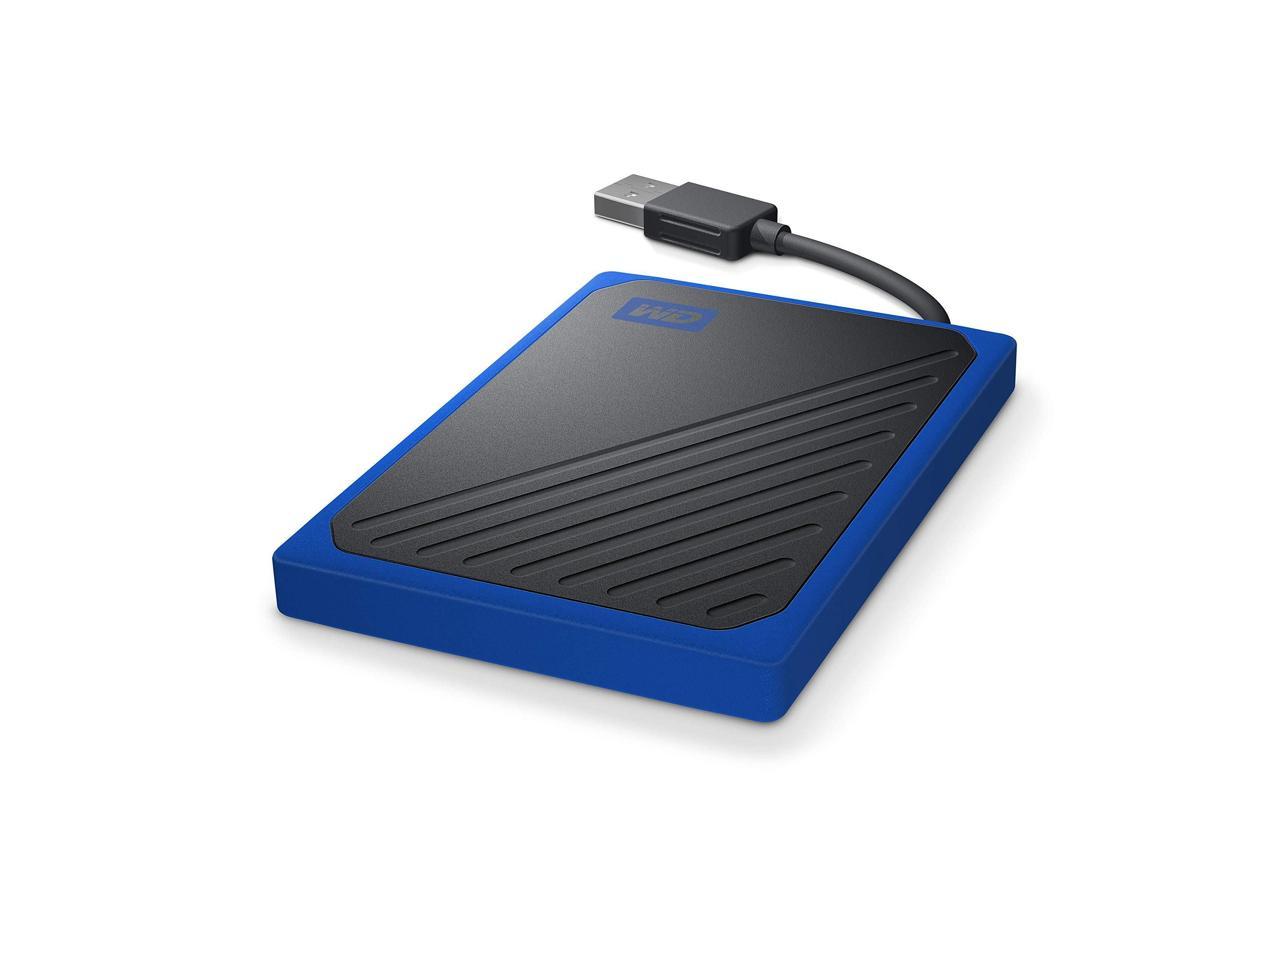 WD 500GB My Passport Go Cobalt SSD Portable External Storage - WDBY9Y5000ABT-WESN (Old model)